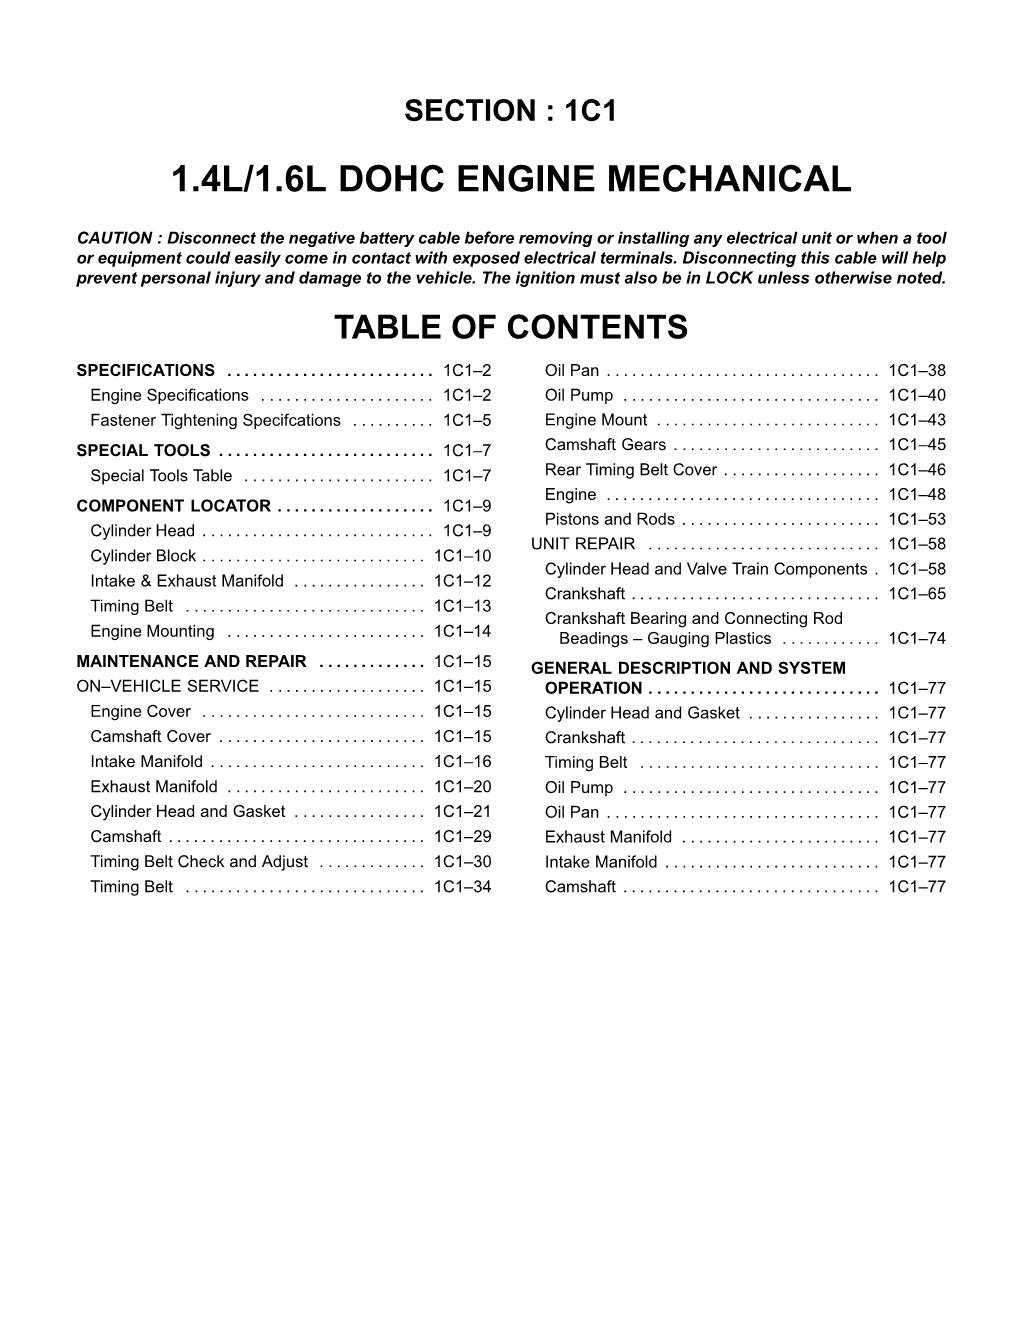 1.4L/1.6L Dohc Engine Mechanical